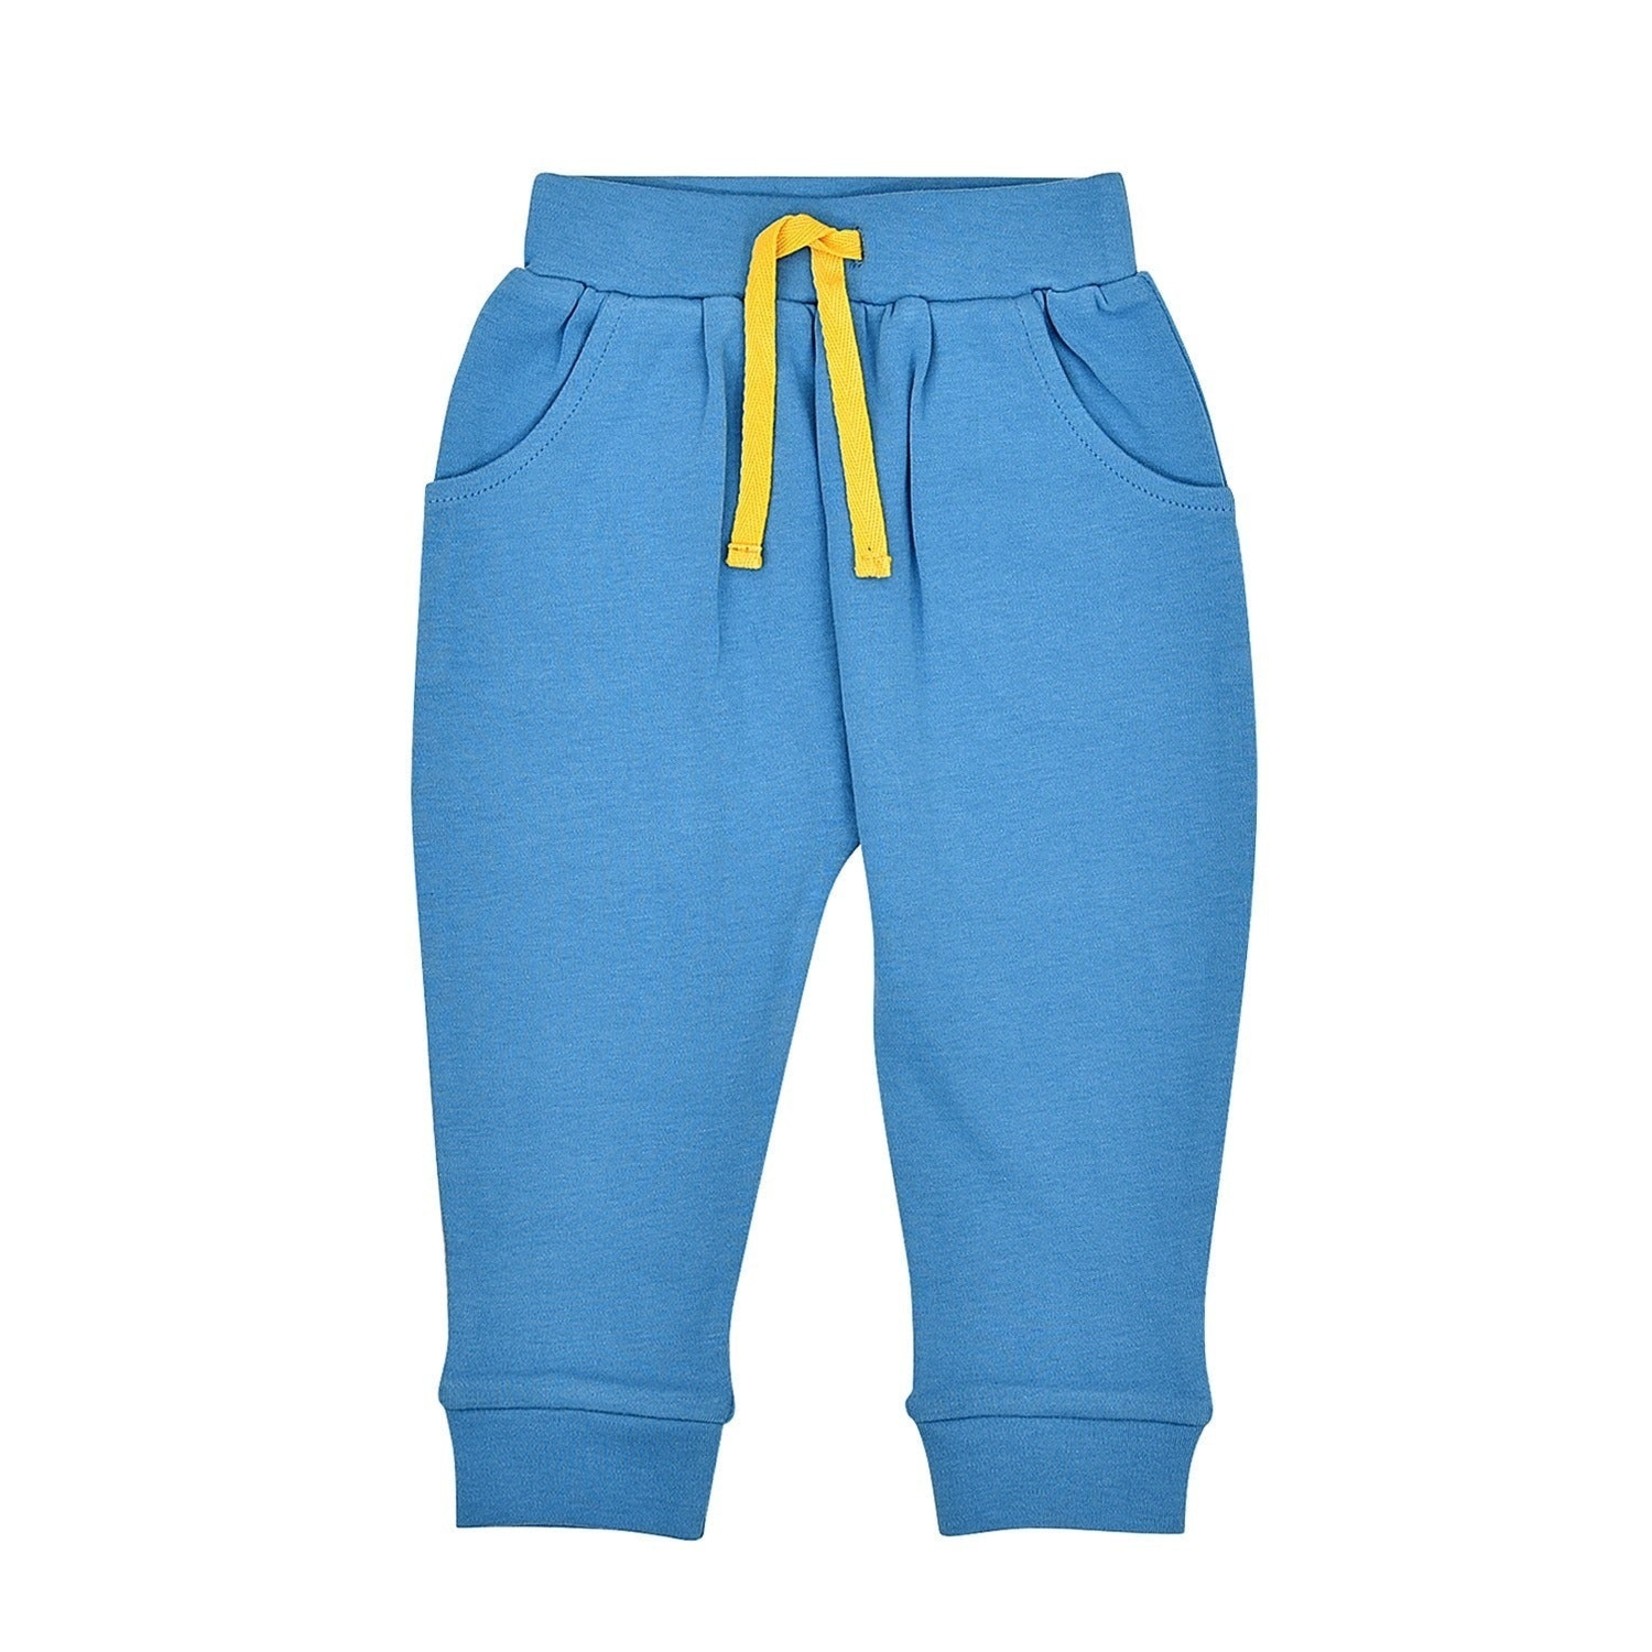 Finn & Emma Lounge Pants - Ripple Blue